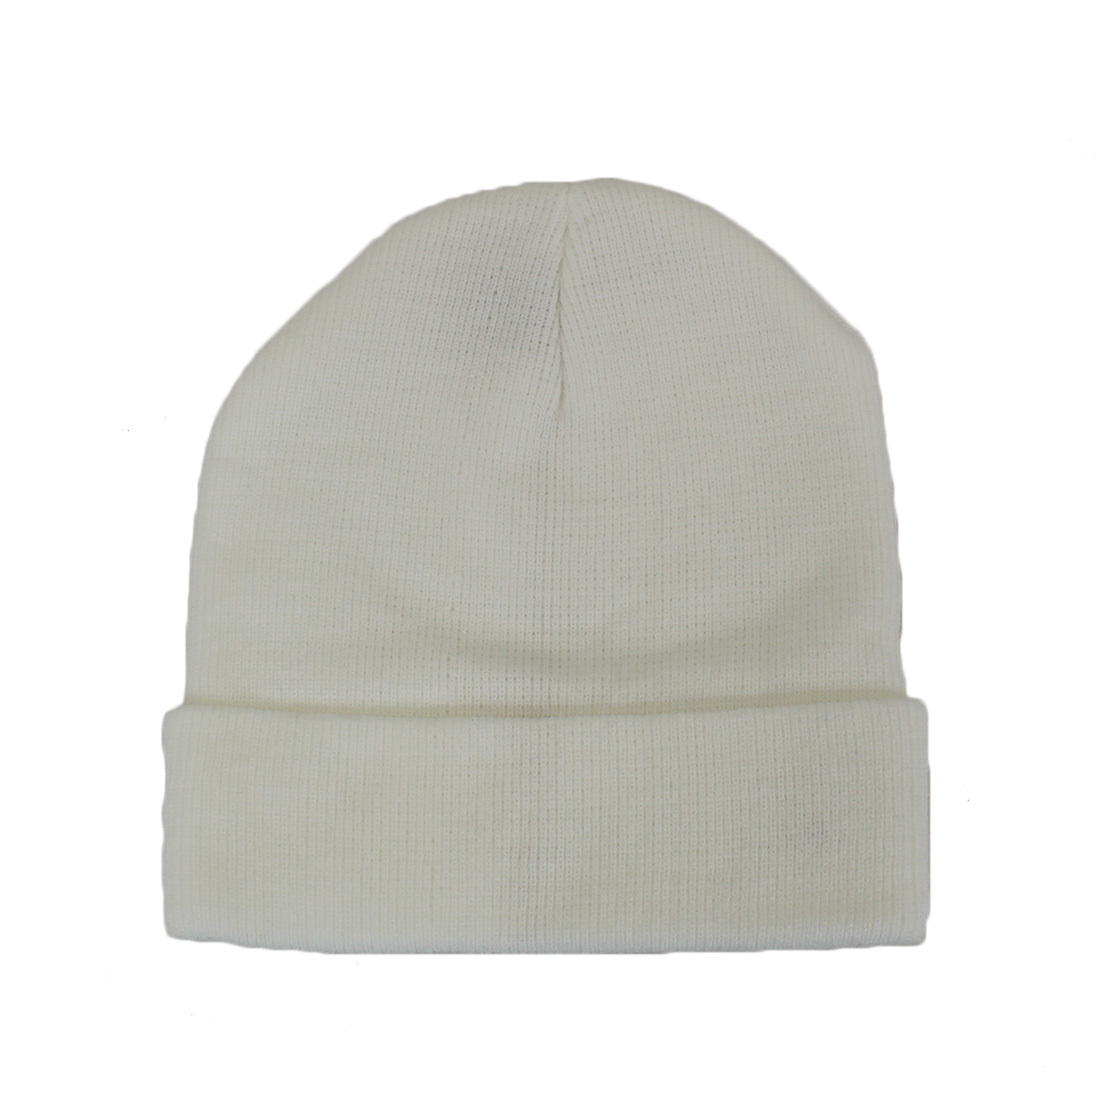  Plain knitted winter cap